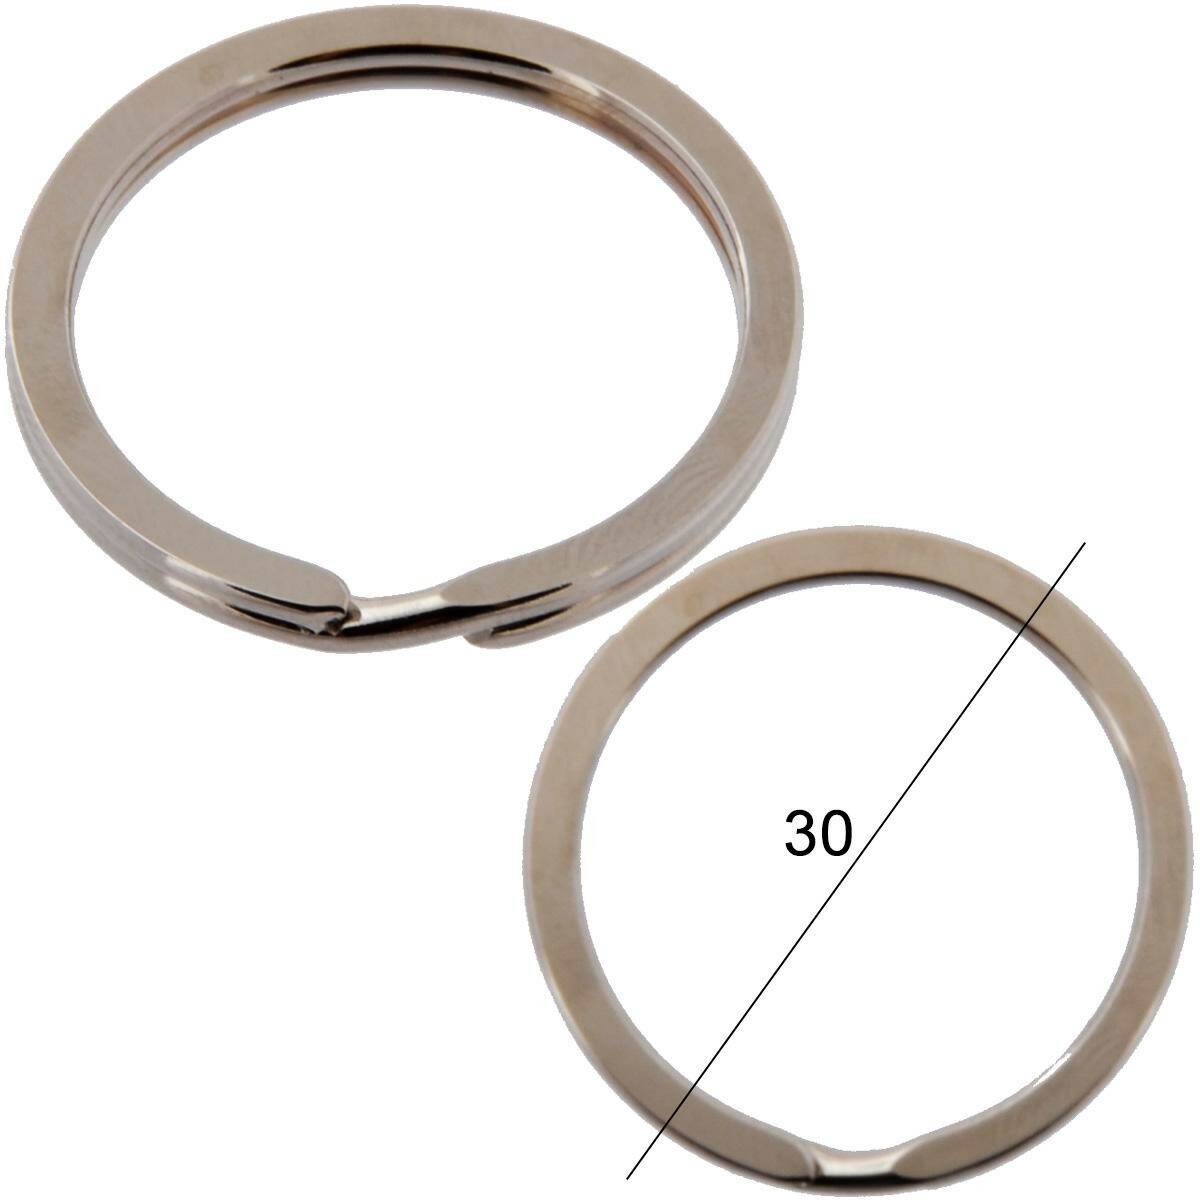 Flat Key rings - diameter 30mm